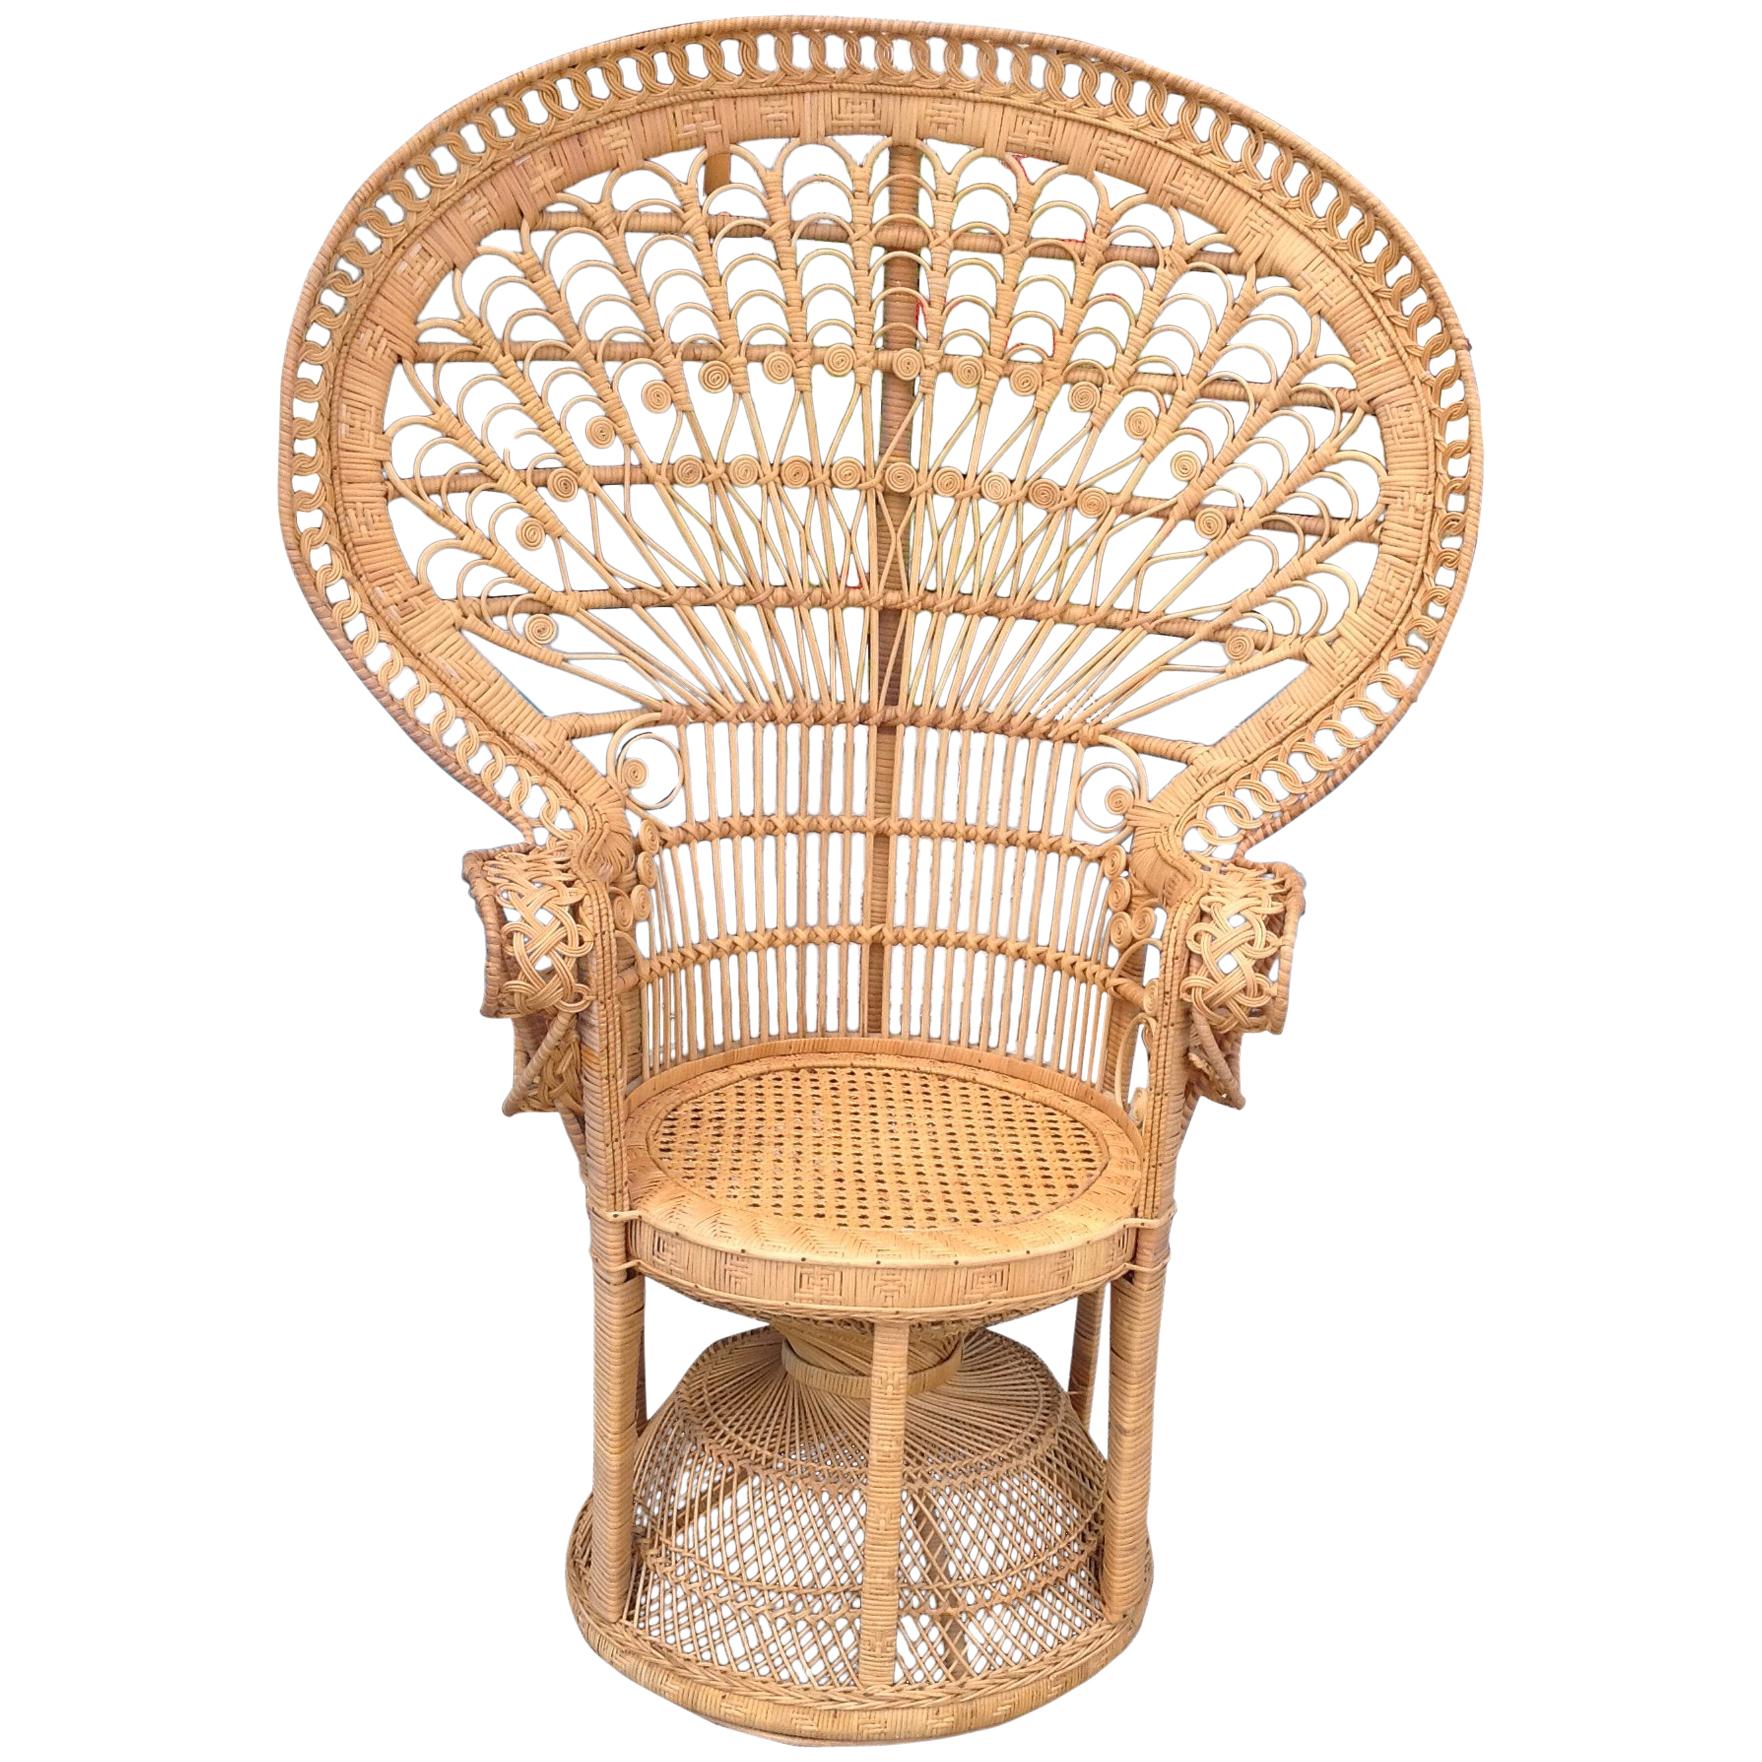 "Emmanuelle" Style "Peacock" Chair